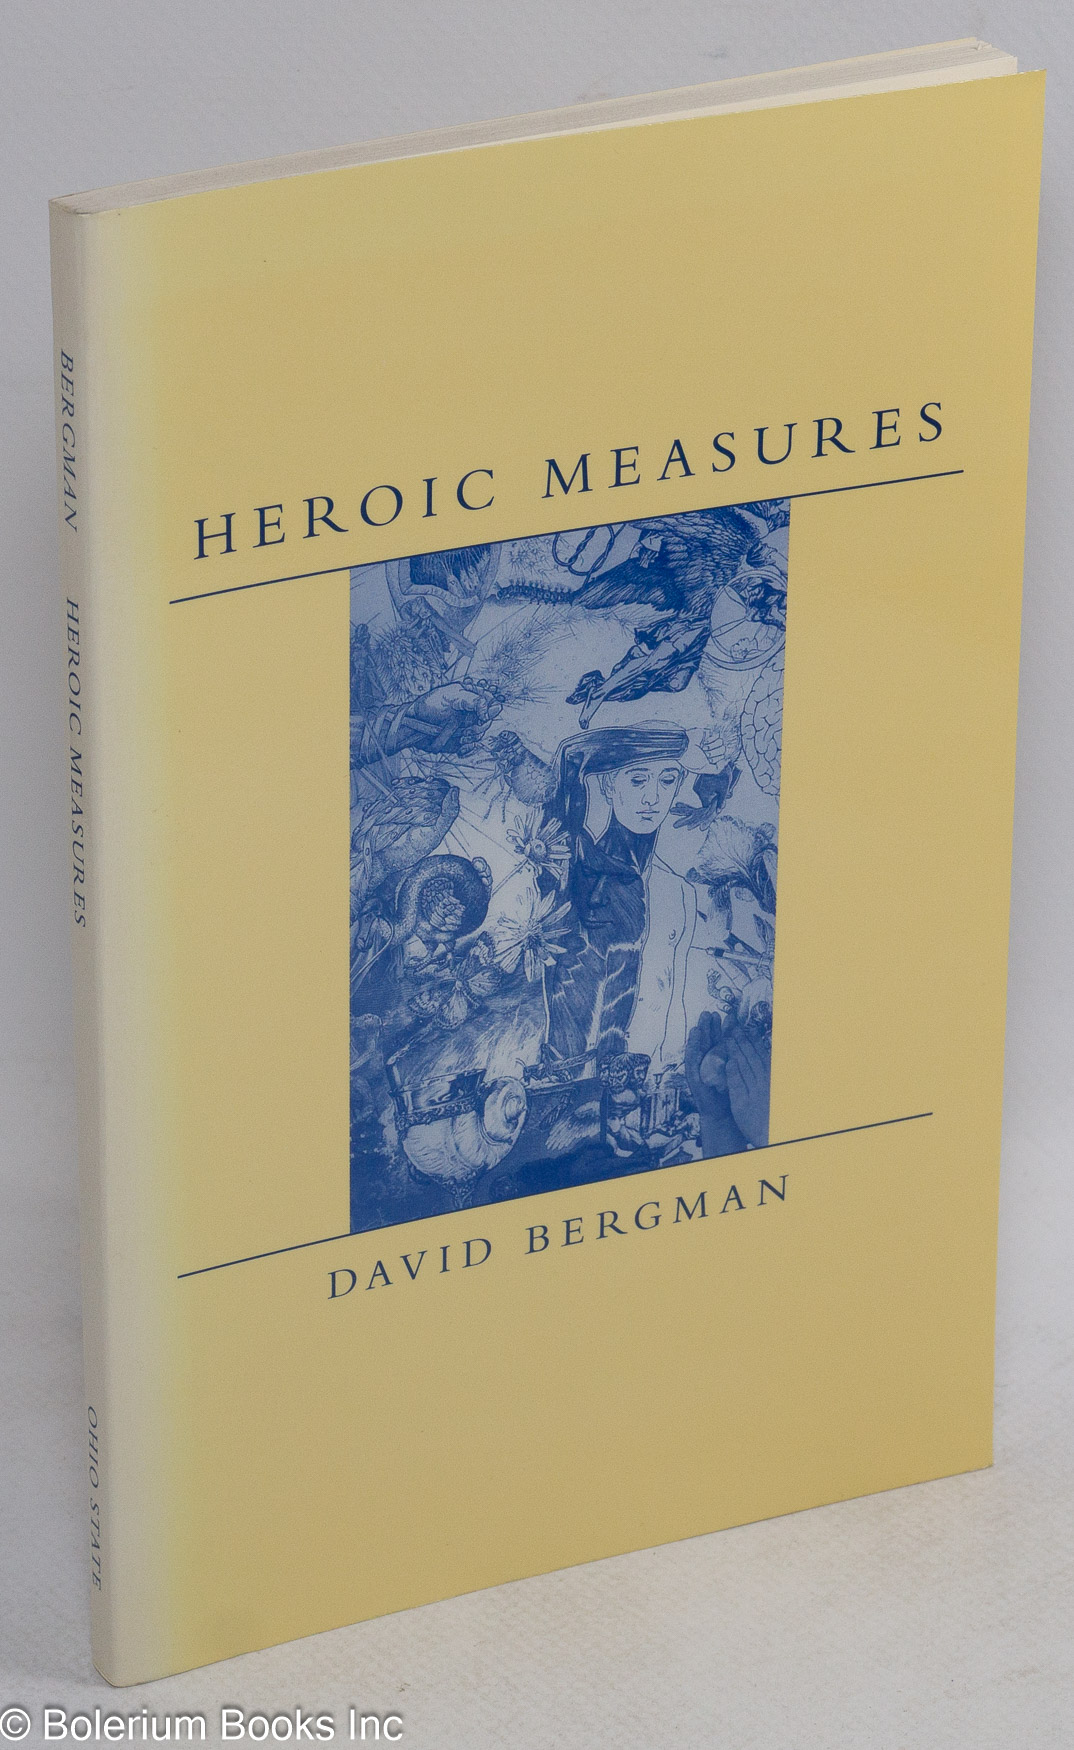 Heroic Measures [poetry] - Bergman, David